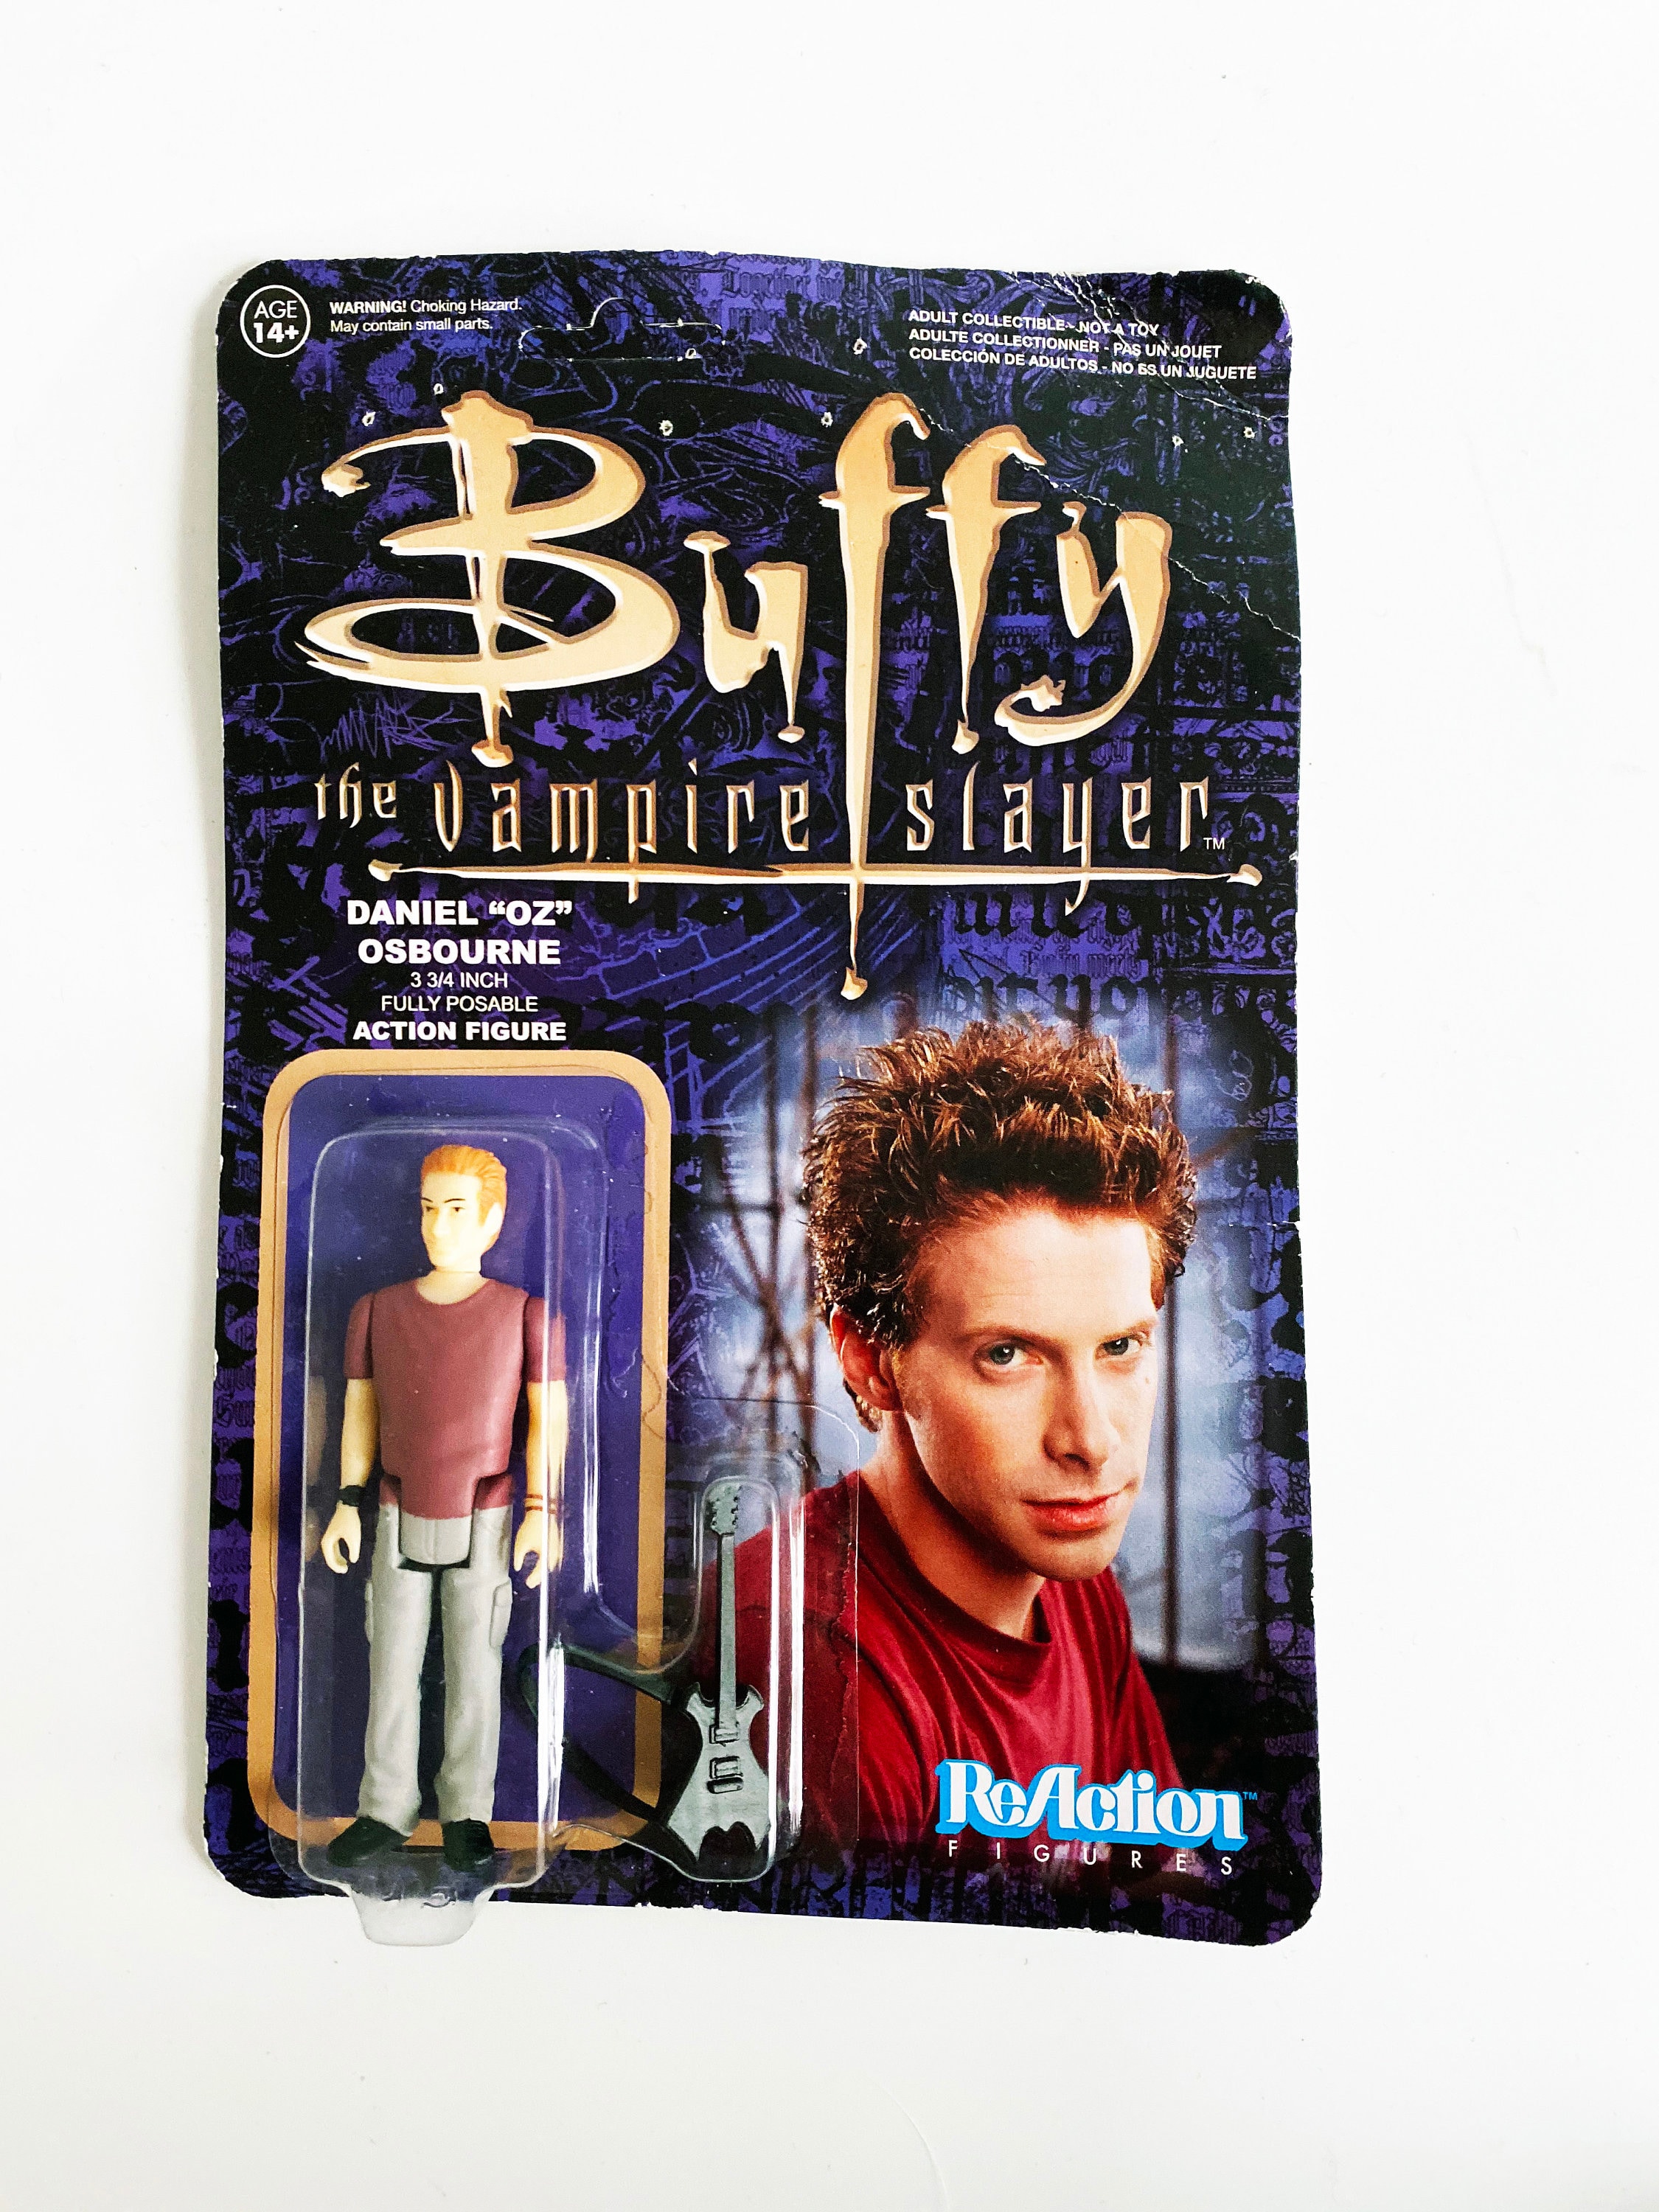 Seth Green Daniel Oz Osbourne Action Figure Buffy the Vampire Slayer TV Show in Packaging Toy Figurine